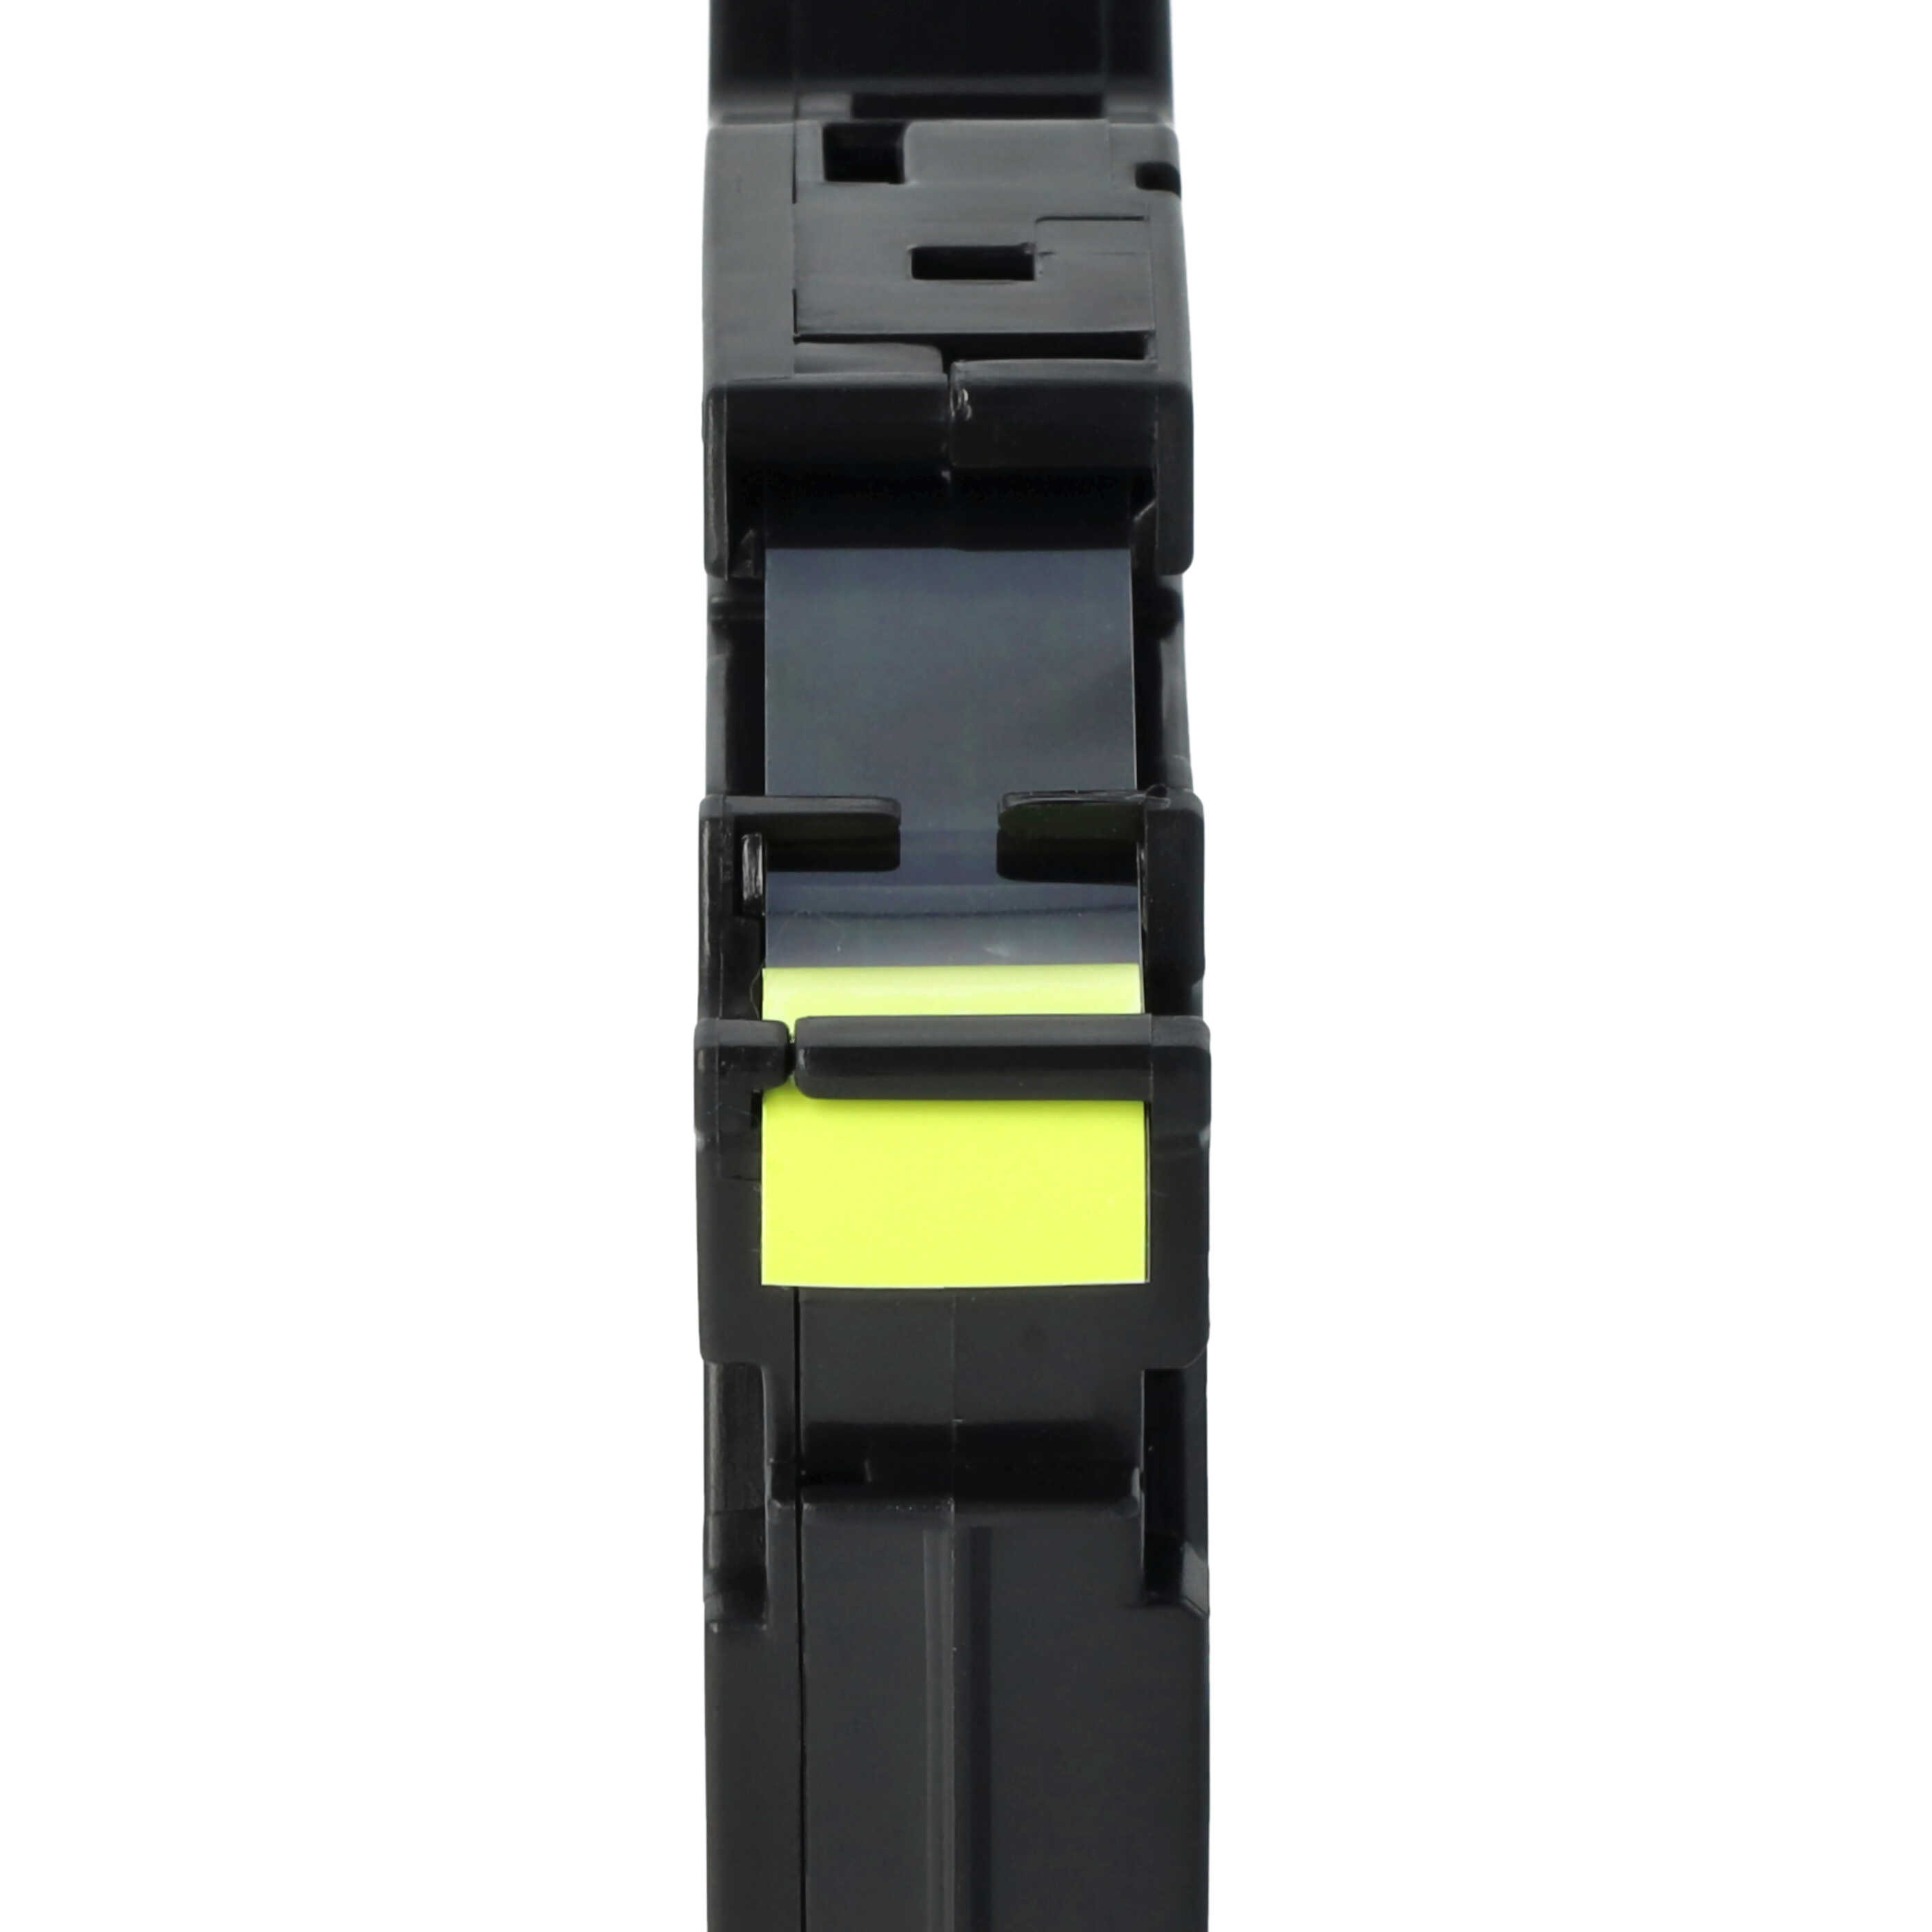 Casete cinta escritura reemplaza Brother TZ-C31, TZE-C31 Negro su Amarillo neon